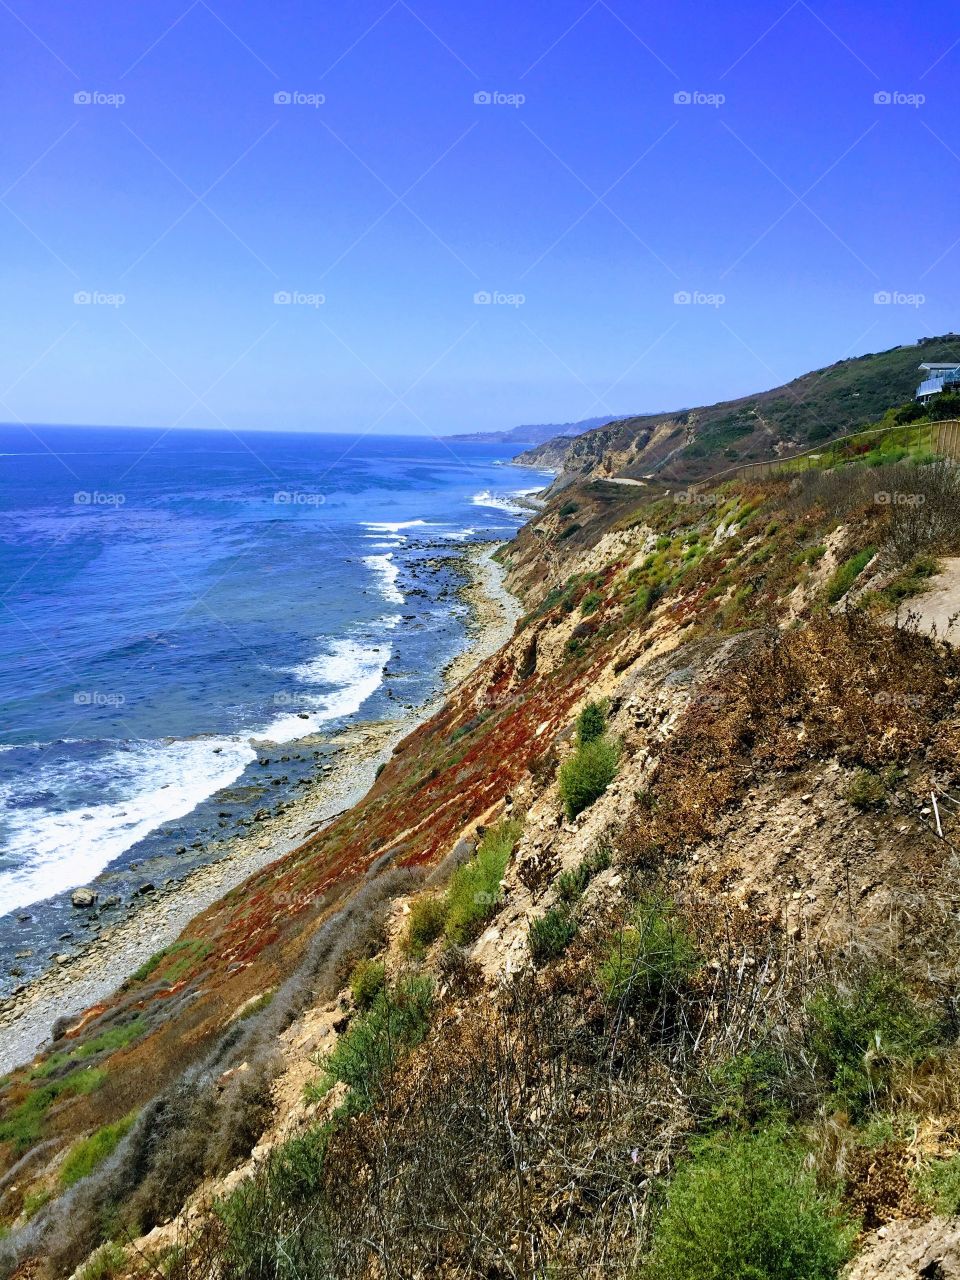 California Coastline, in Mid August.